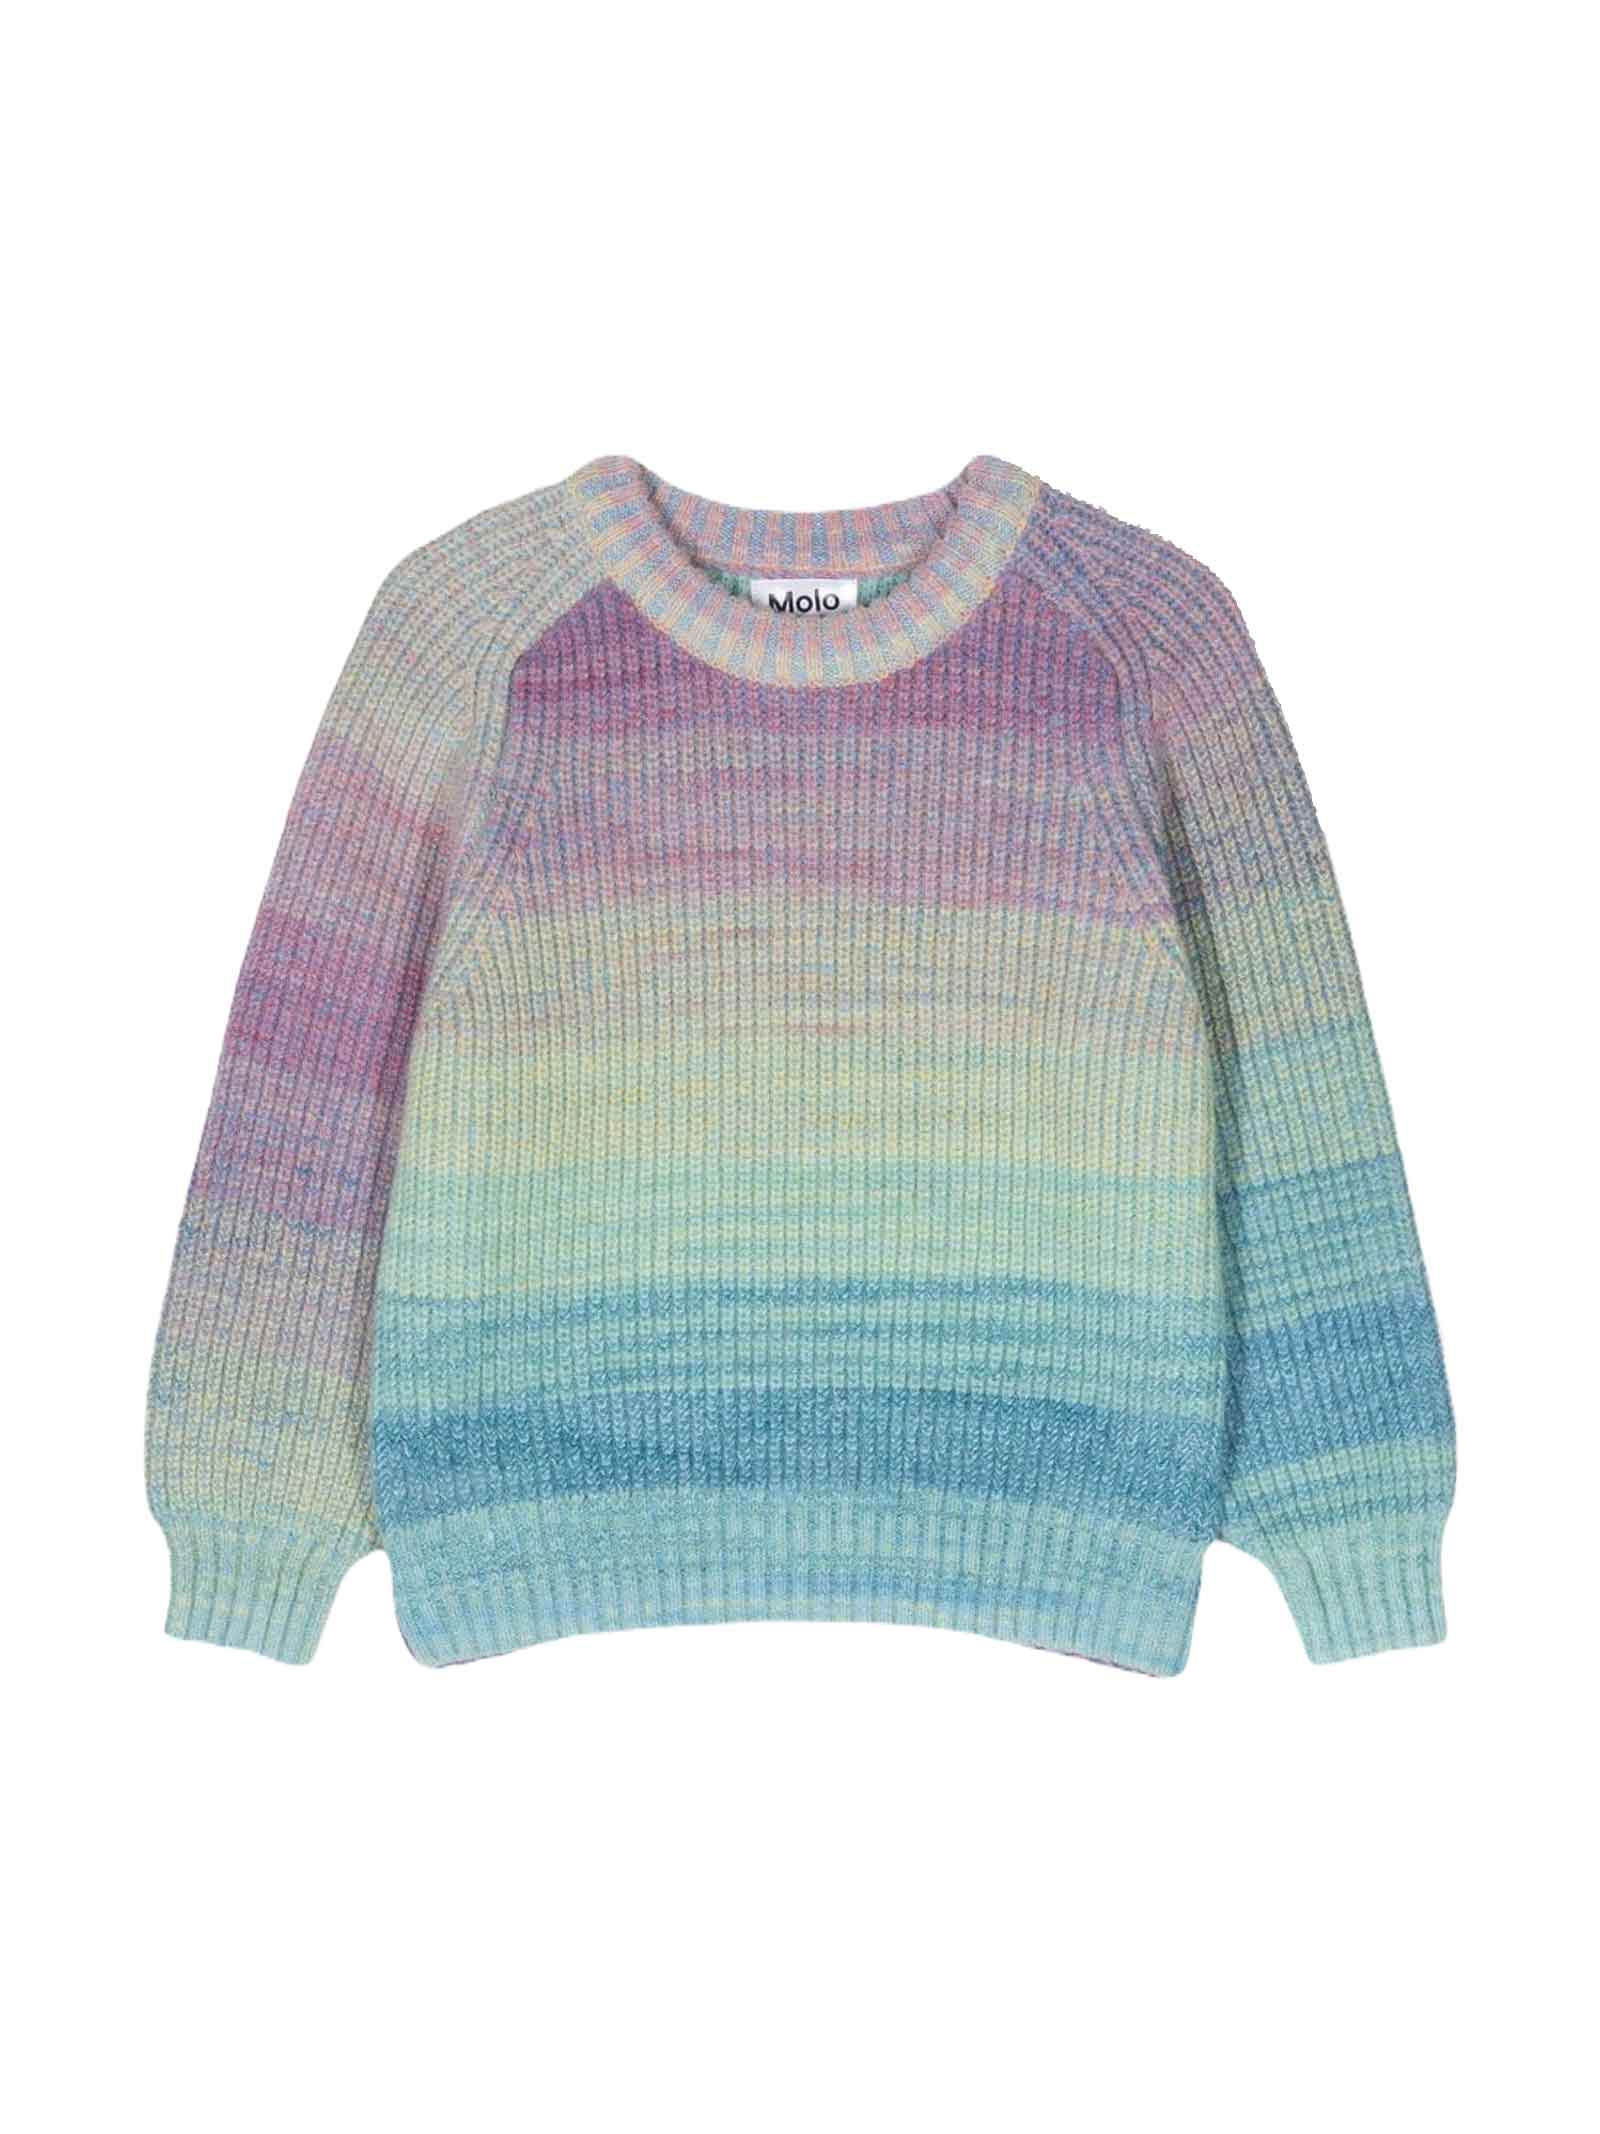 Molo Multicolor Sweater Unisex Kids